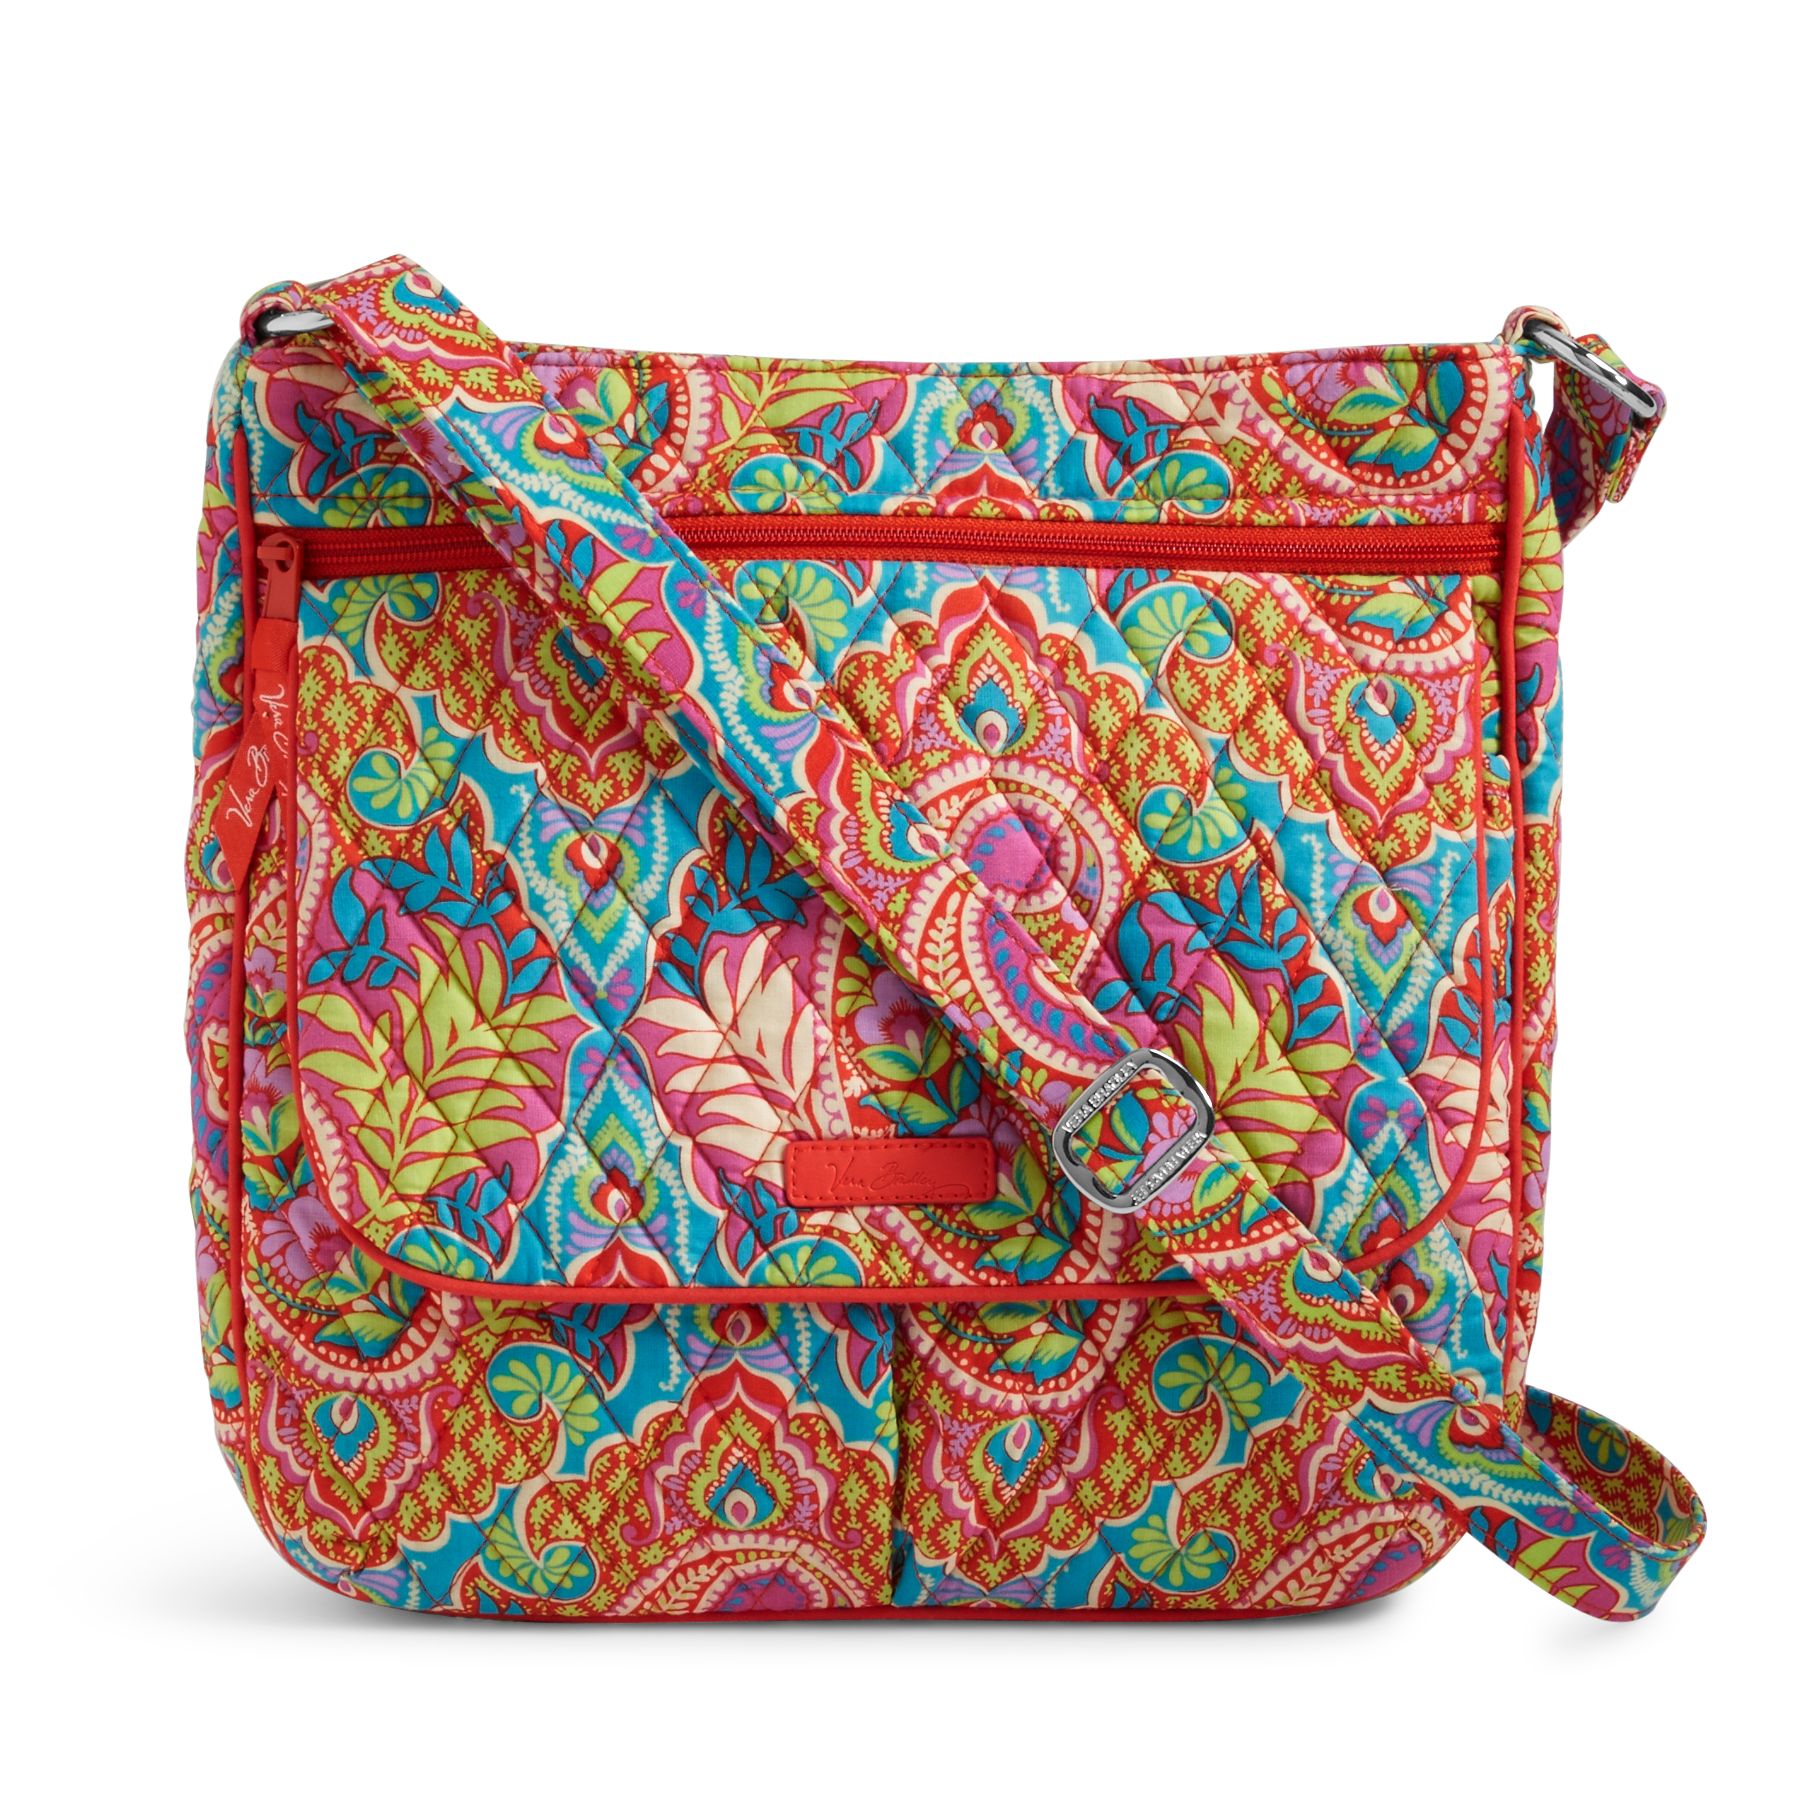 Vera Bradley Double Zip Mailbag Crossbody Bag | eBay